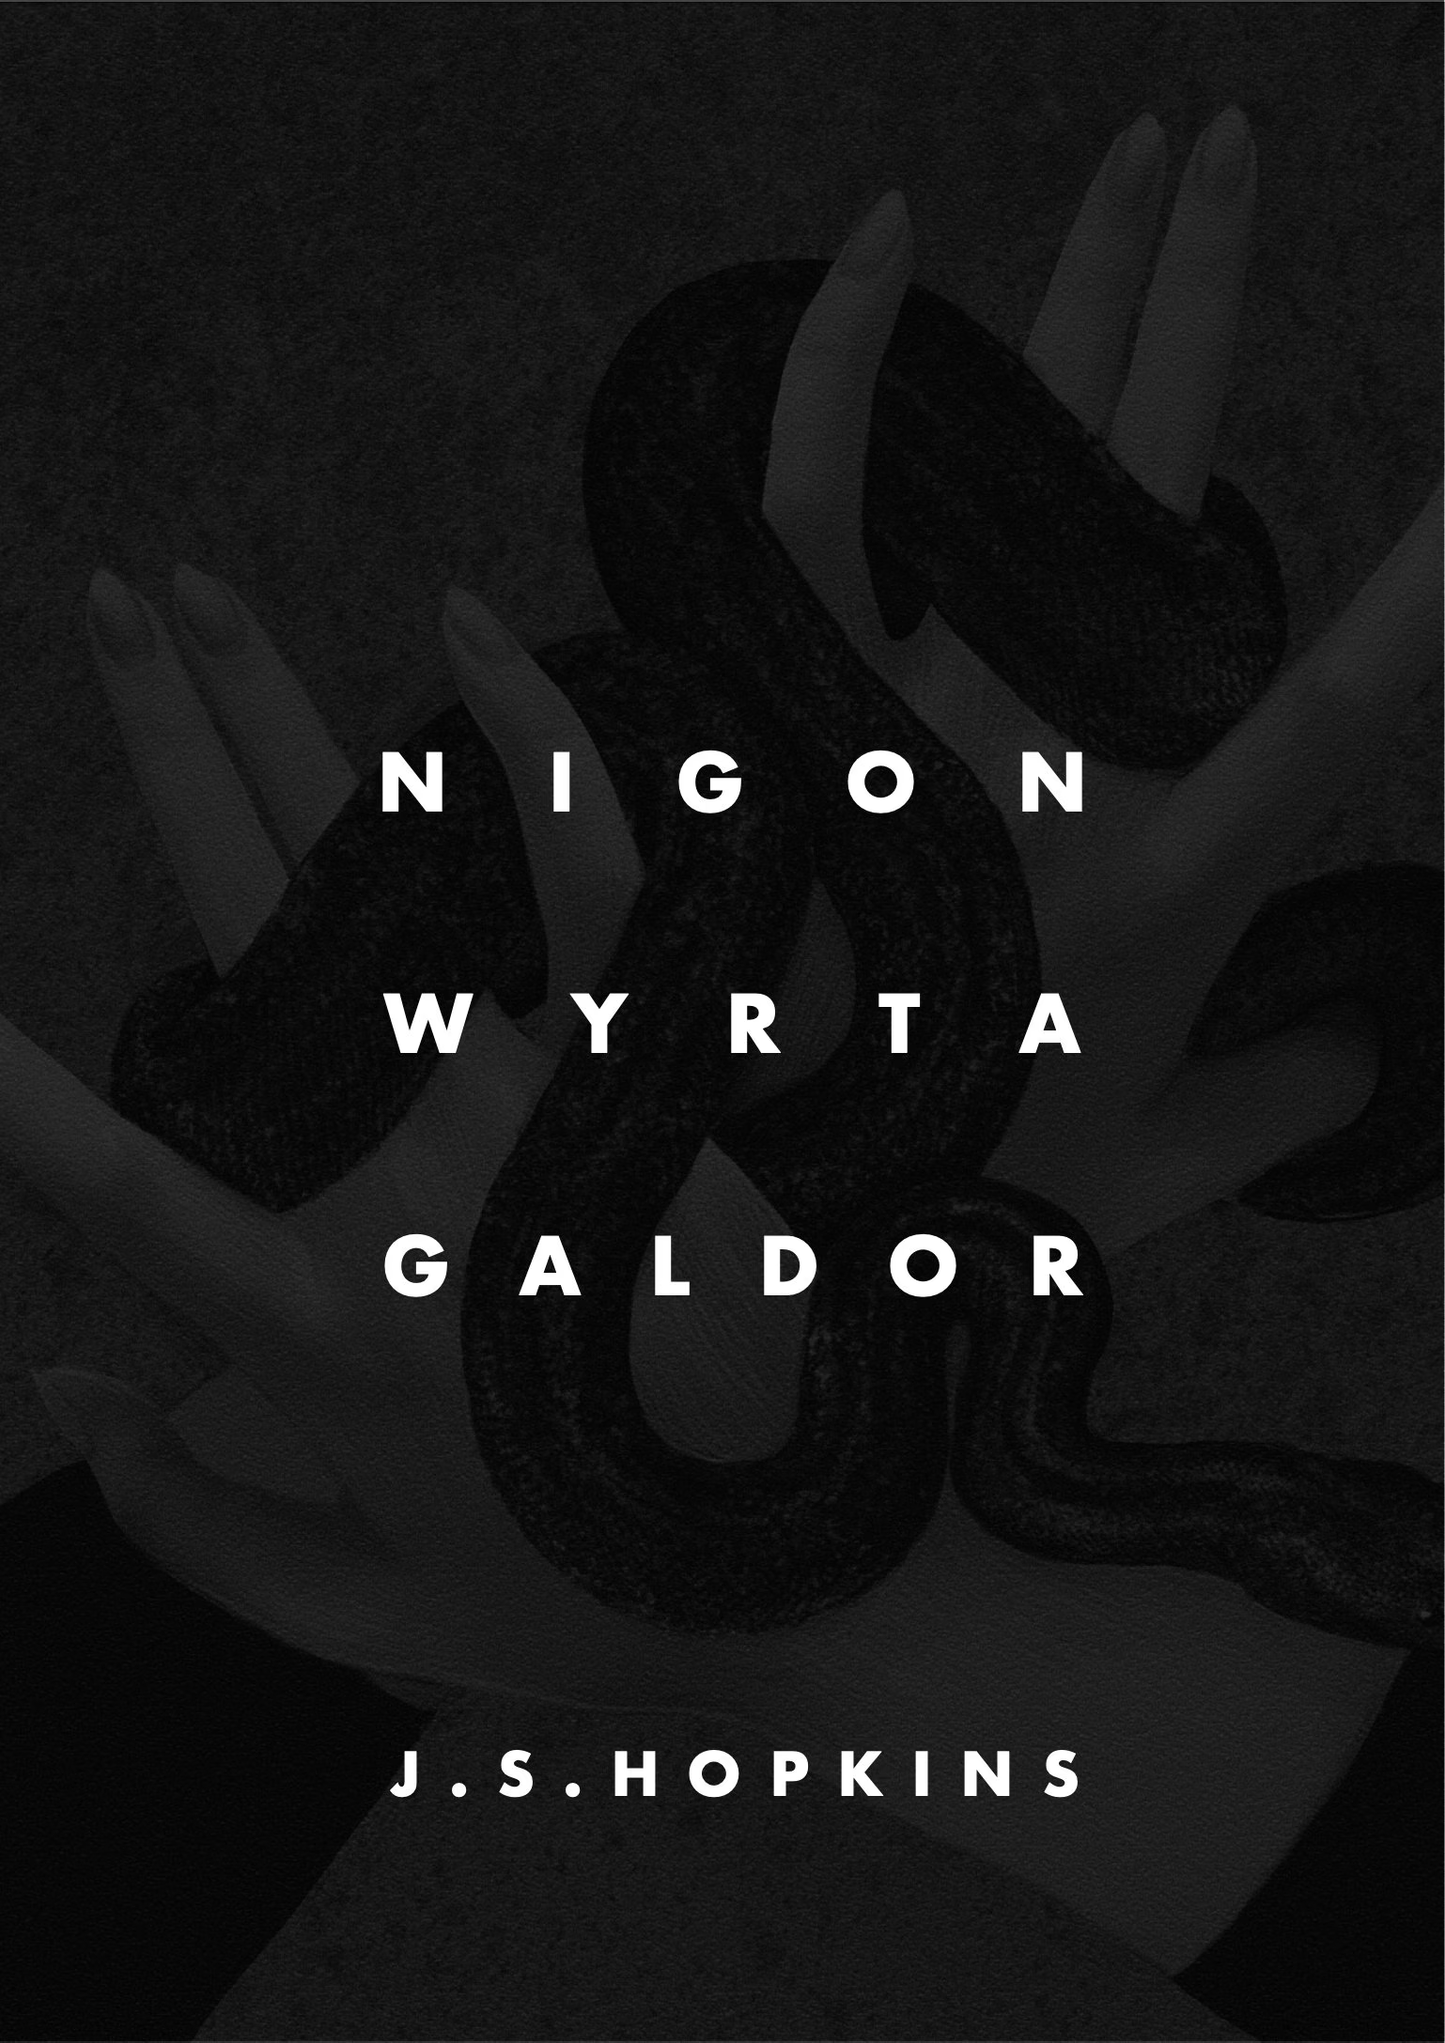 Nine Plants Spell "Nigon Wyrta Galdor"